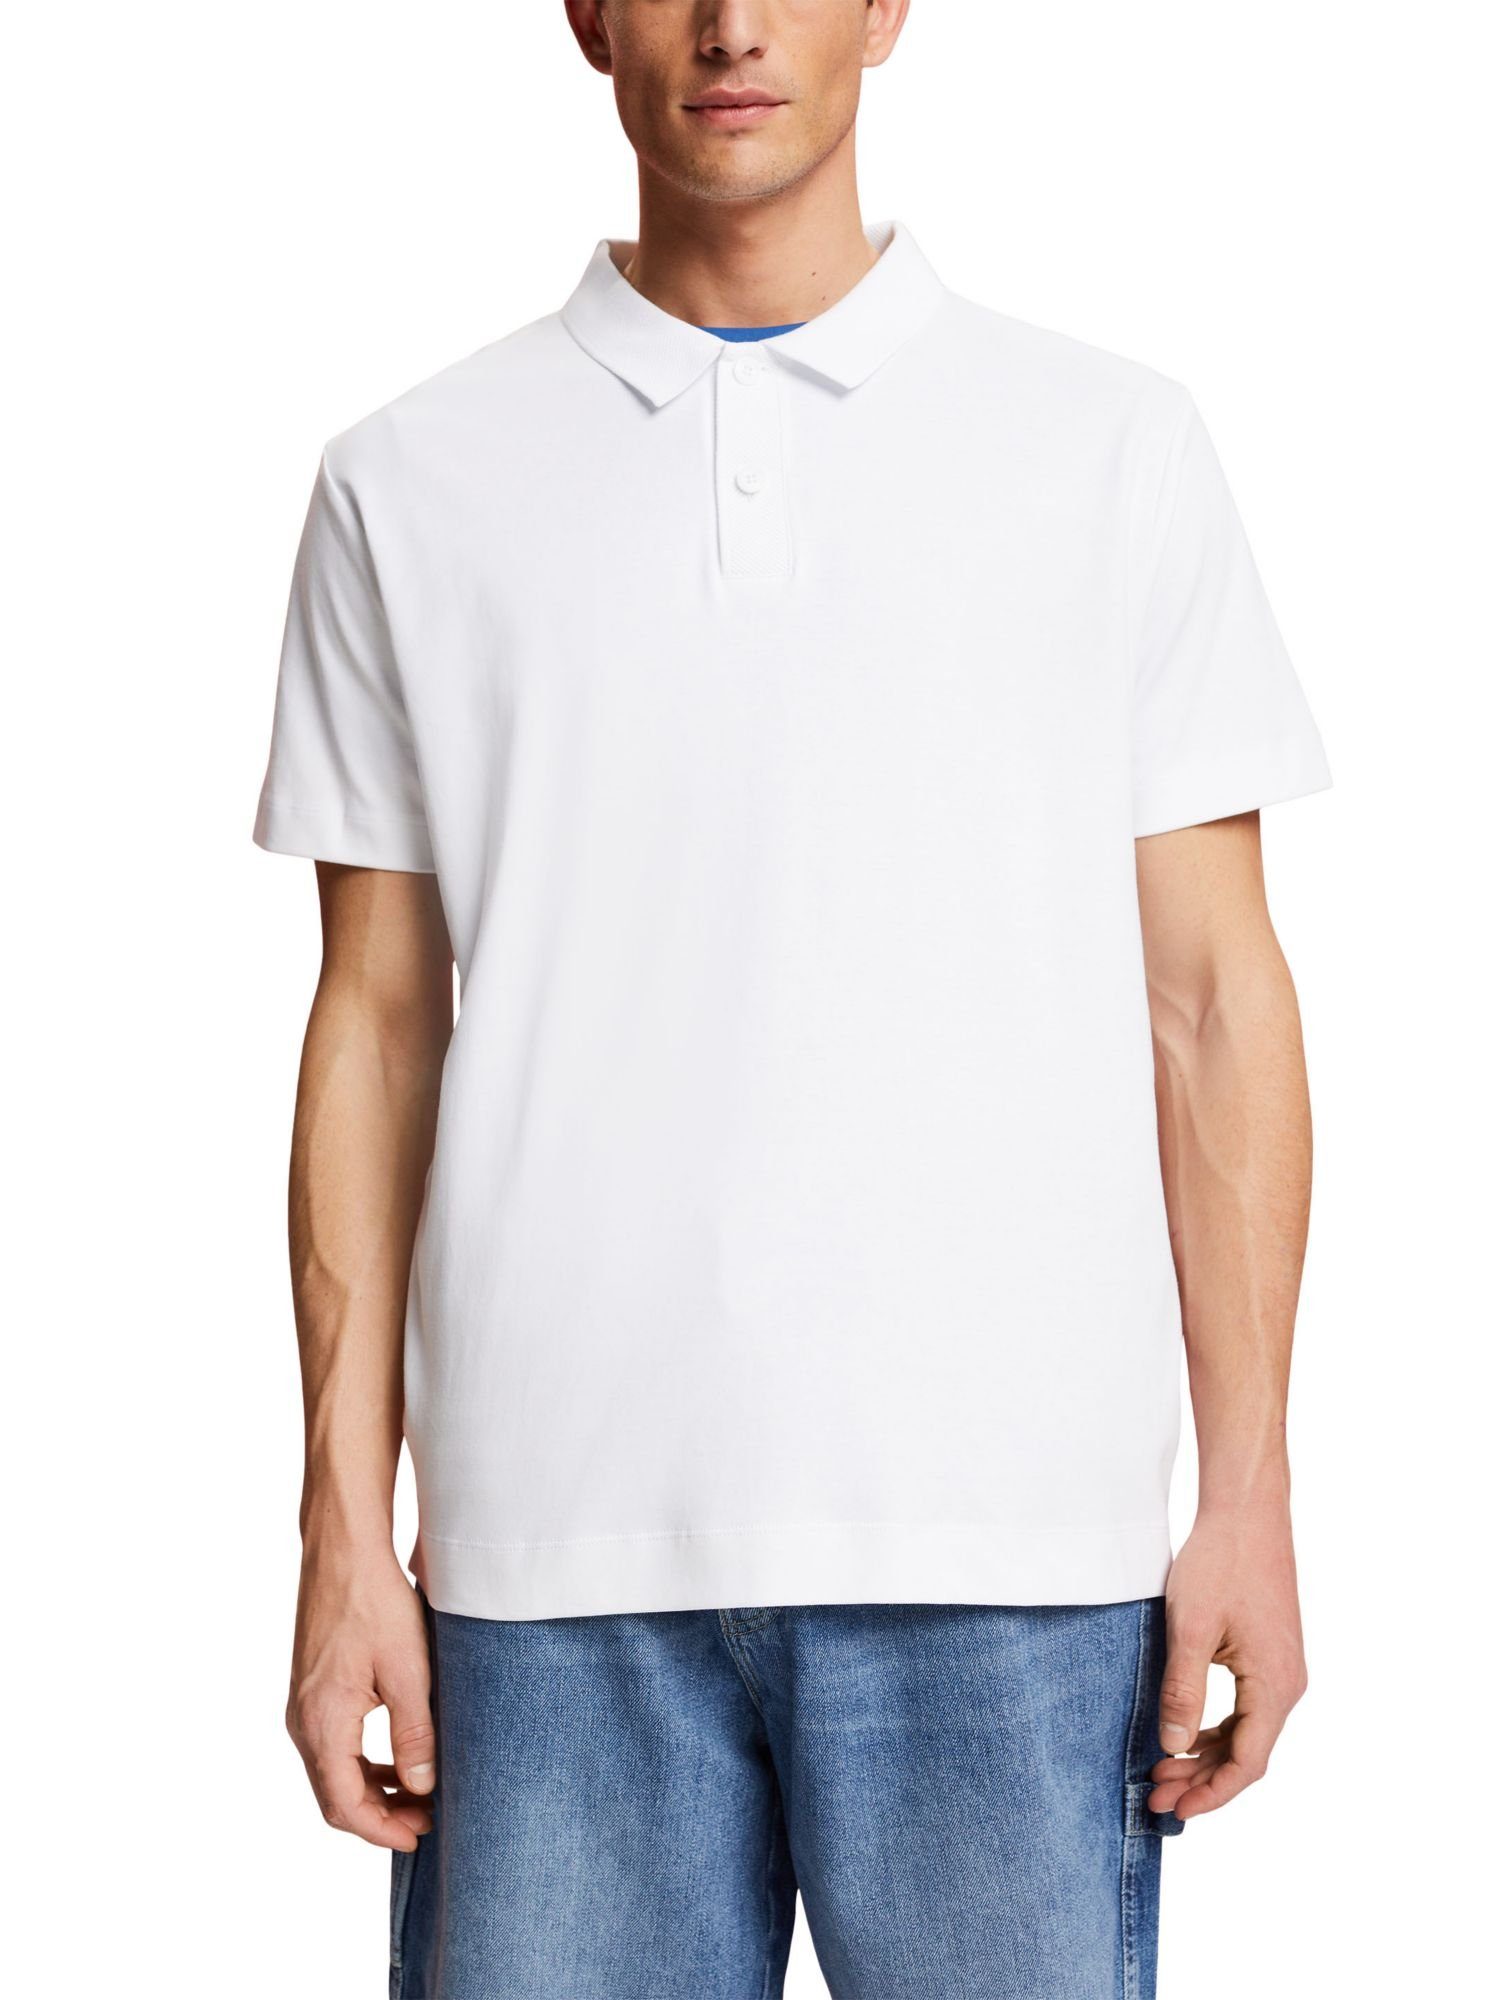 Esprit Collection Poloshirt Poloshirt WHITE aus Pima-Baumwolle